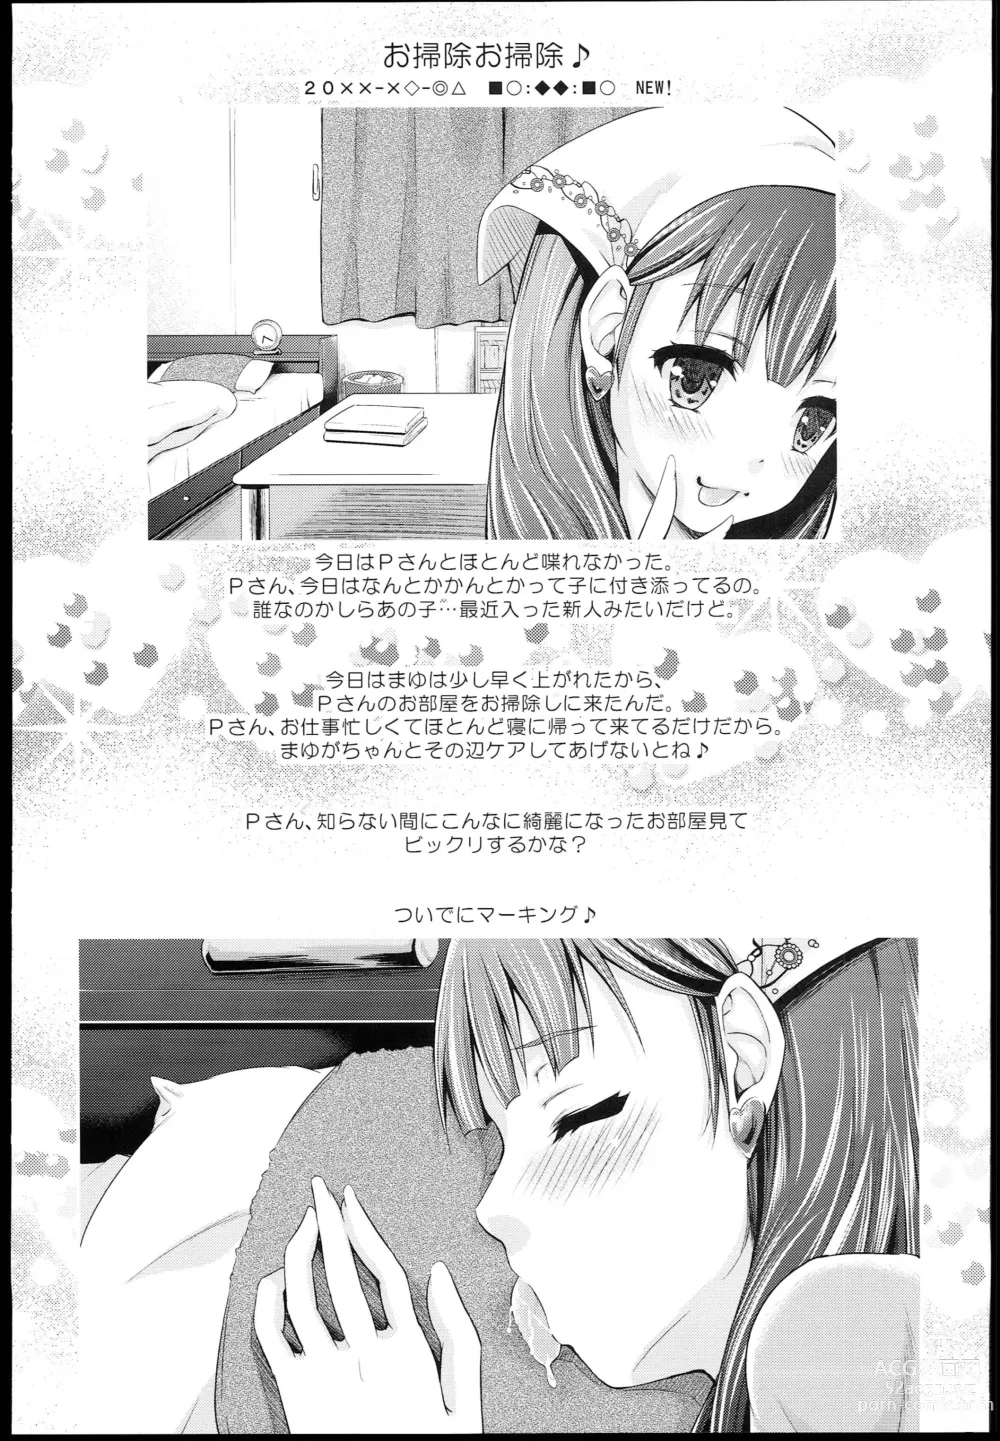 Page 3 of doujinshi Mamayu no hikoushiki mousou blog